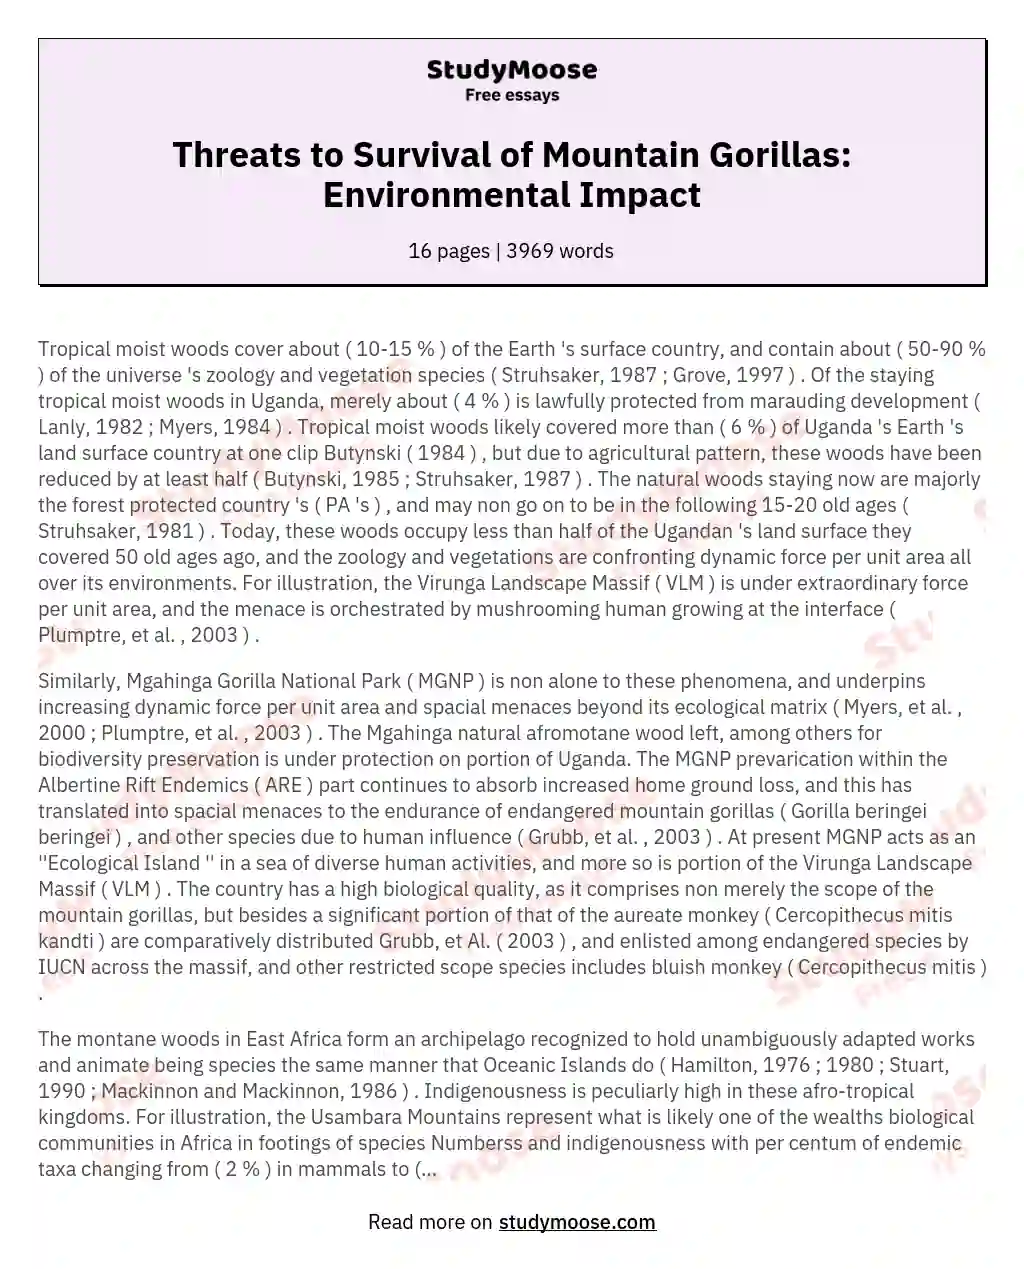 Threats to Survival of Mountain Gorillas: Environmental Impact essay